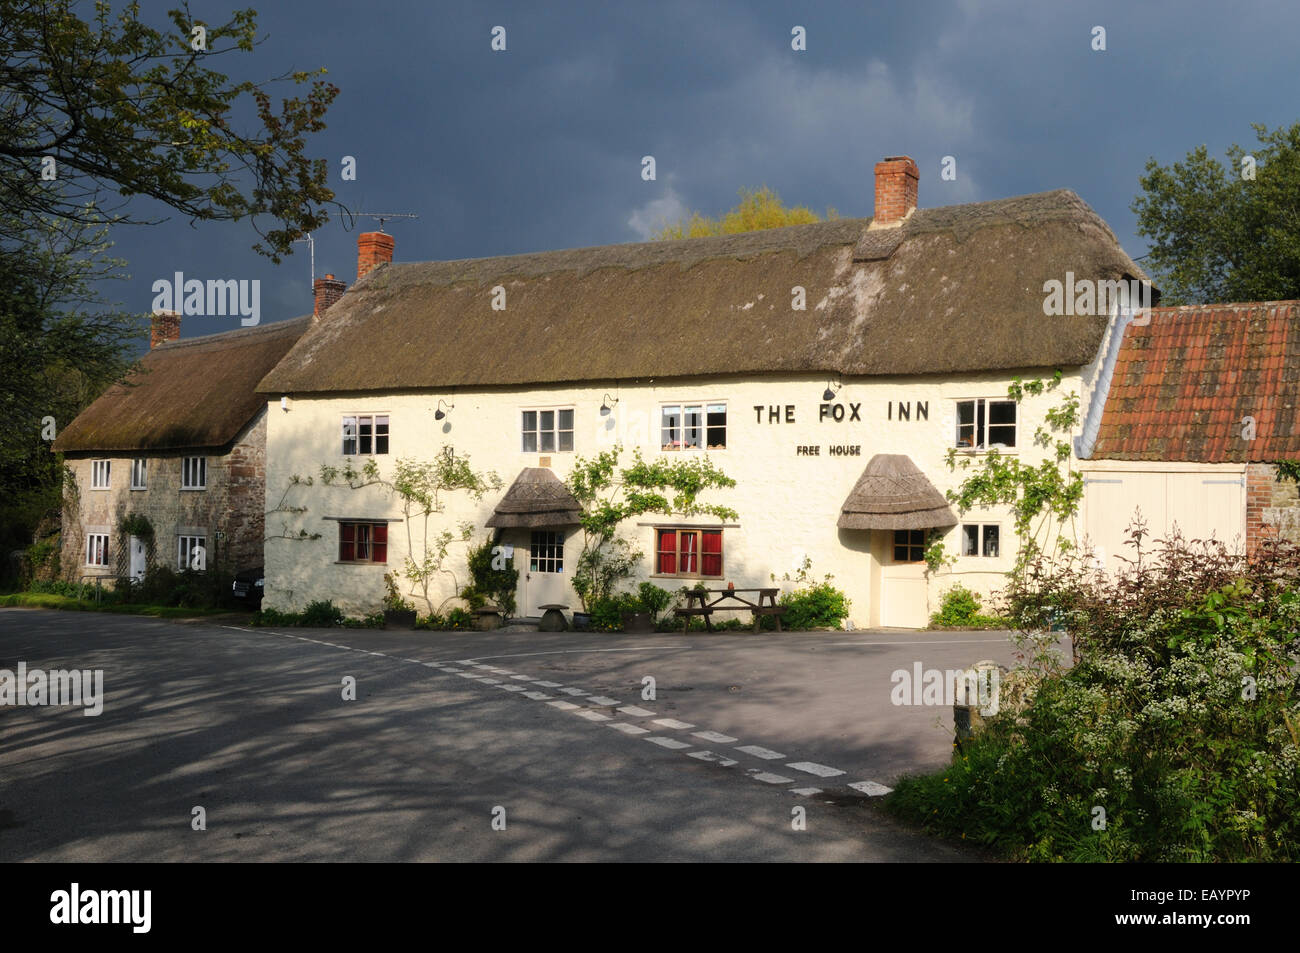 The Fox Inn, in Corscombe, Dorset, England Stock Photo